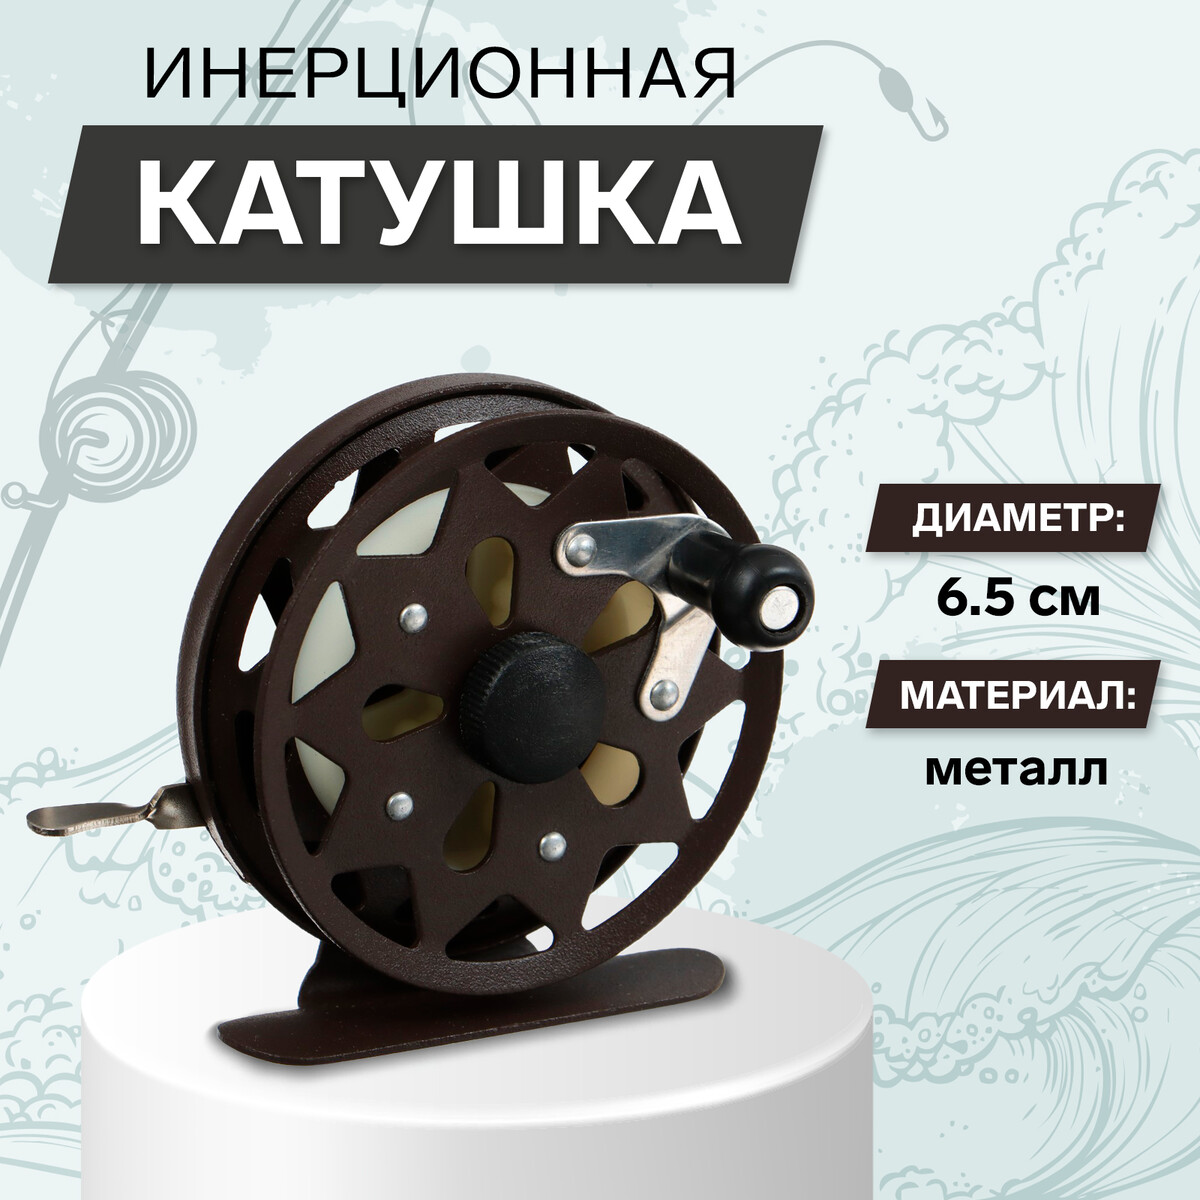 Катушка инерционная, металл, диаметр 6.5 см, цвет темно-коричневый,tl65 катушка инерционная металл диаметр 7 5 см коричневый tl75